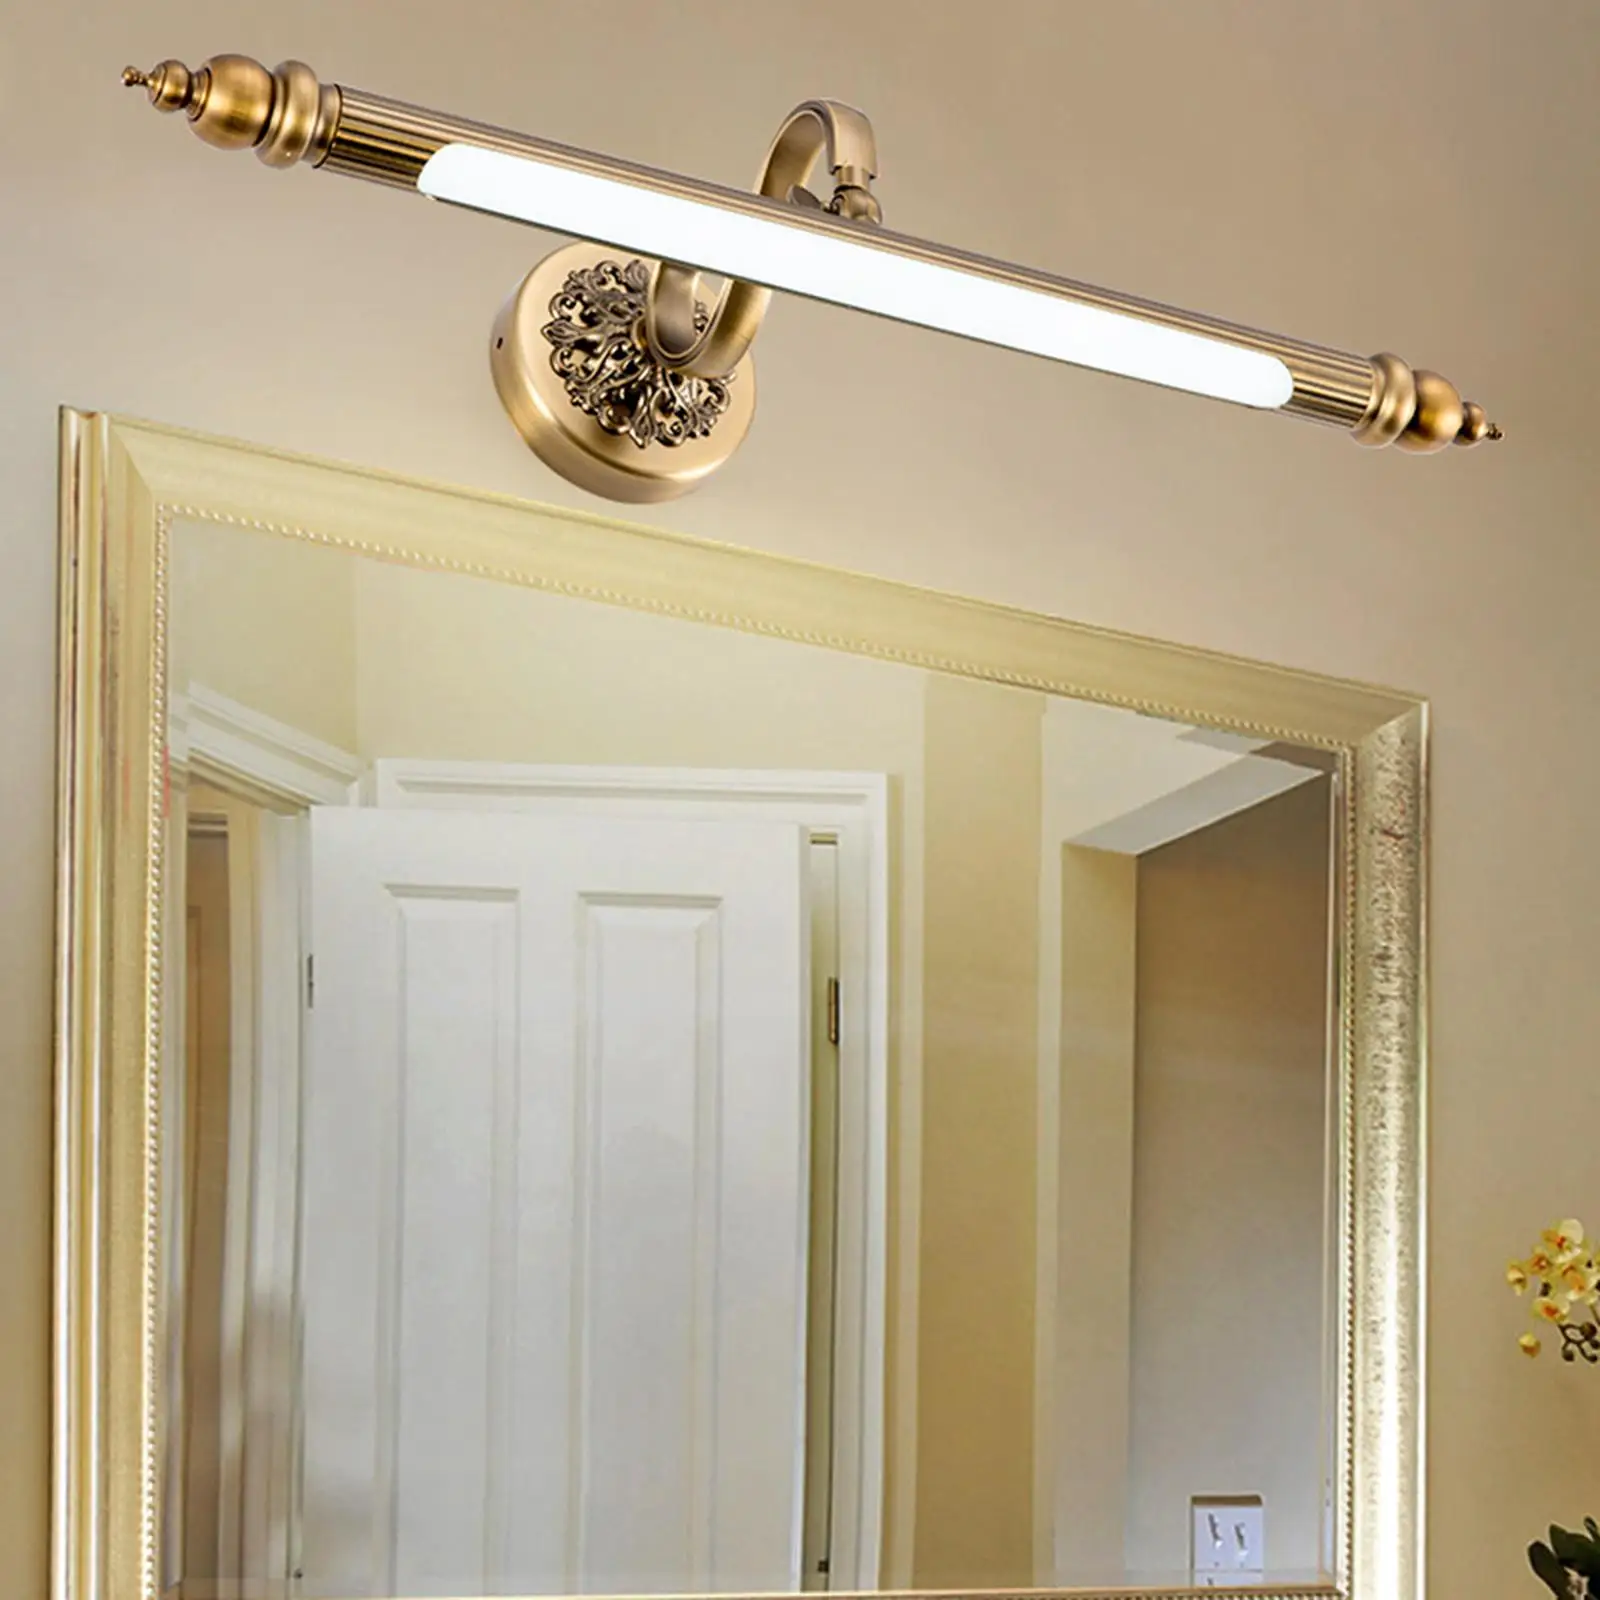 Wired LED Mirror Light Adjustable Night Light Atmosphere Light Vanity Lighting Light for Bedroom Bathroom Hotel Bedside Indoor